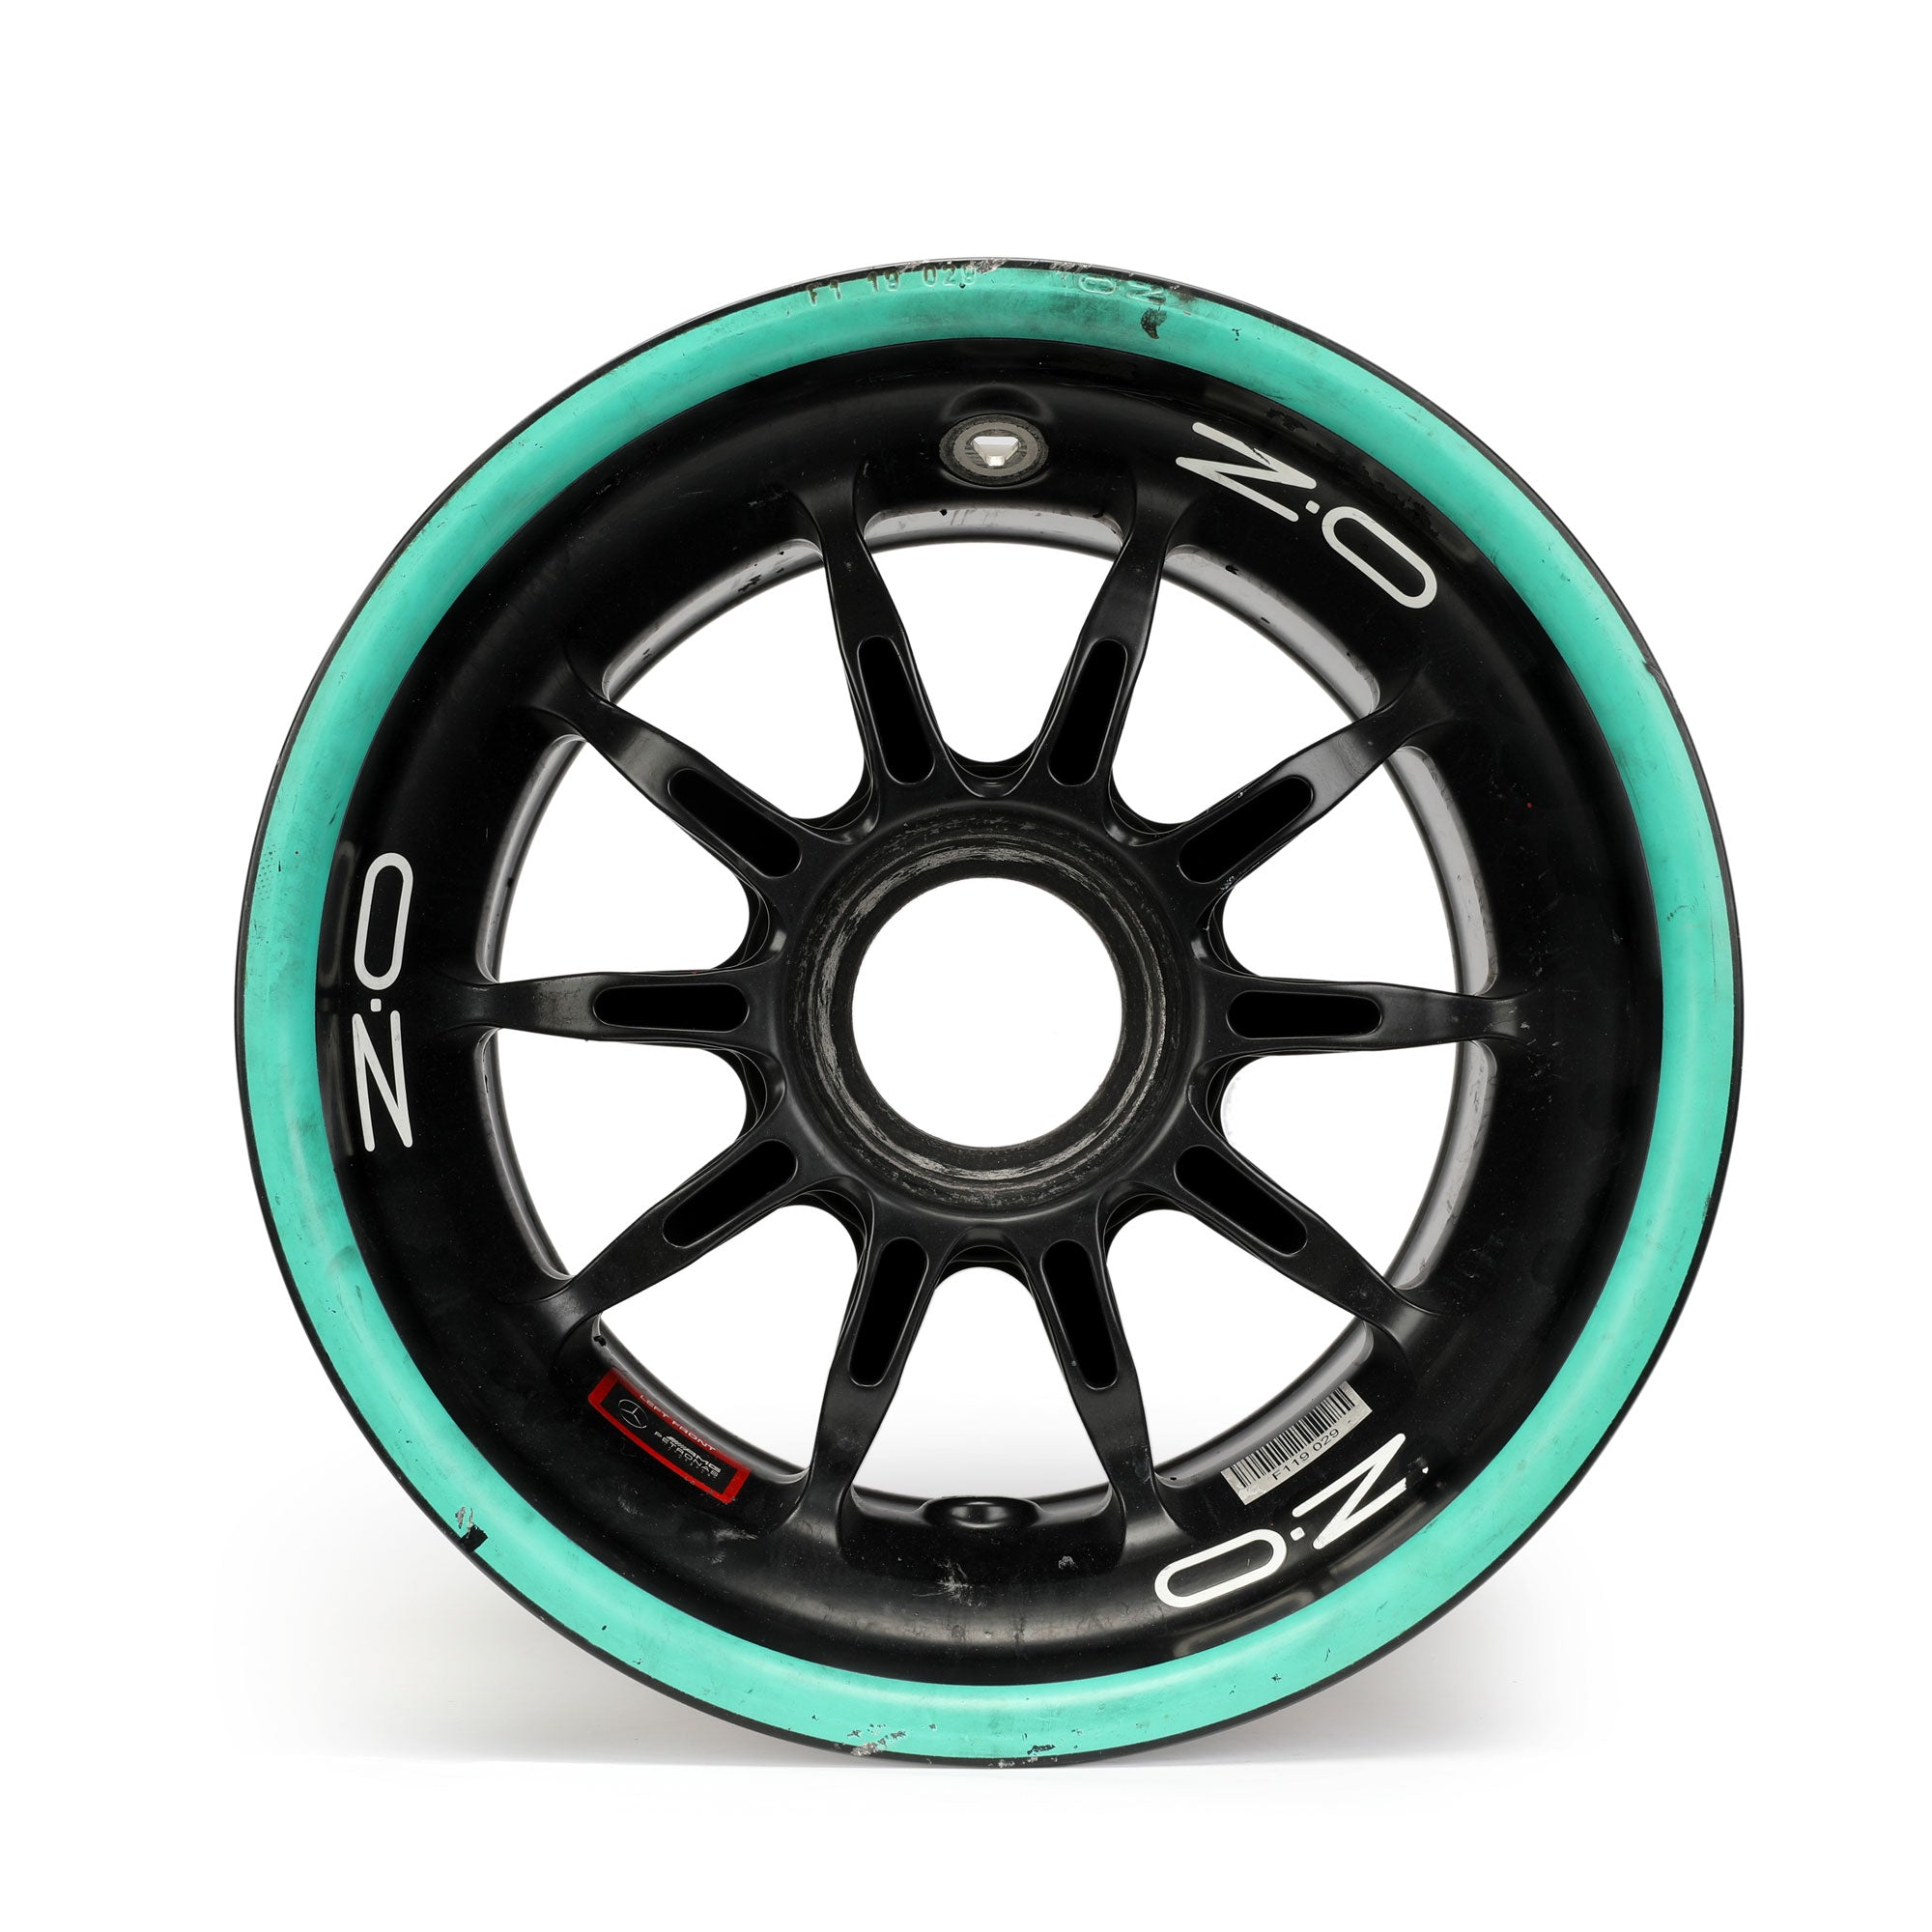 Lewis Hamilton 2019 Mercedes-AMG Petronas Grand Prix Used Front Wheel Rim - British GP